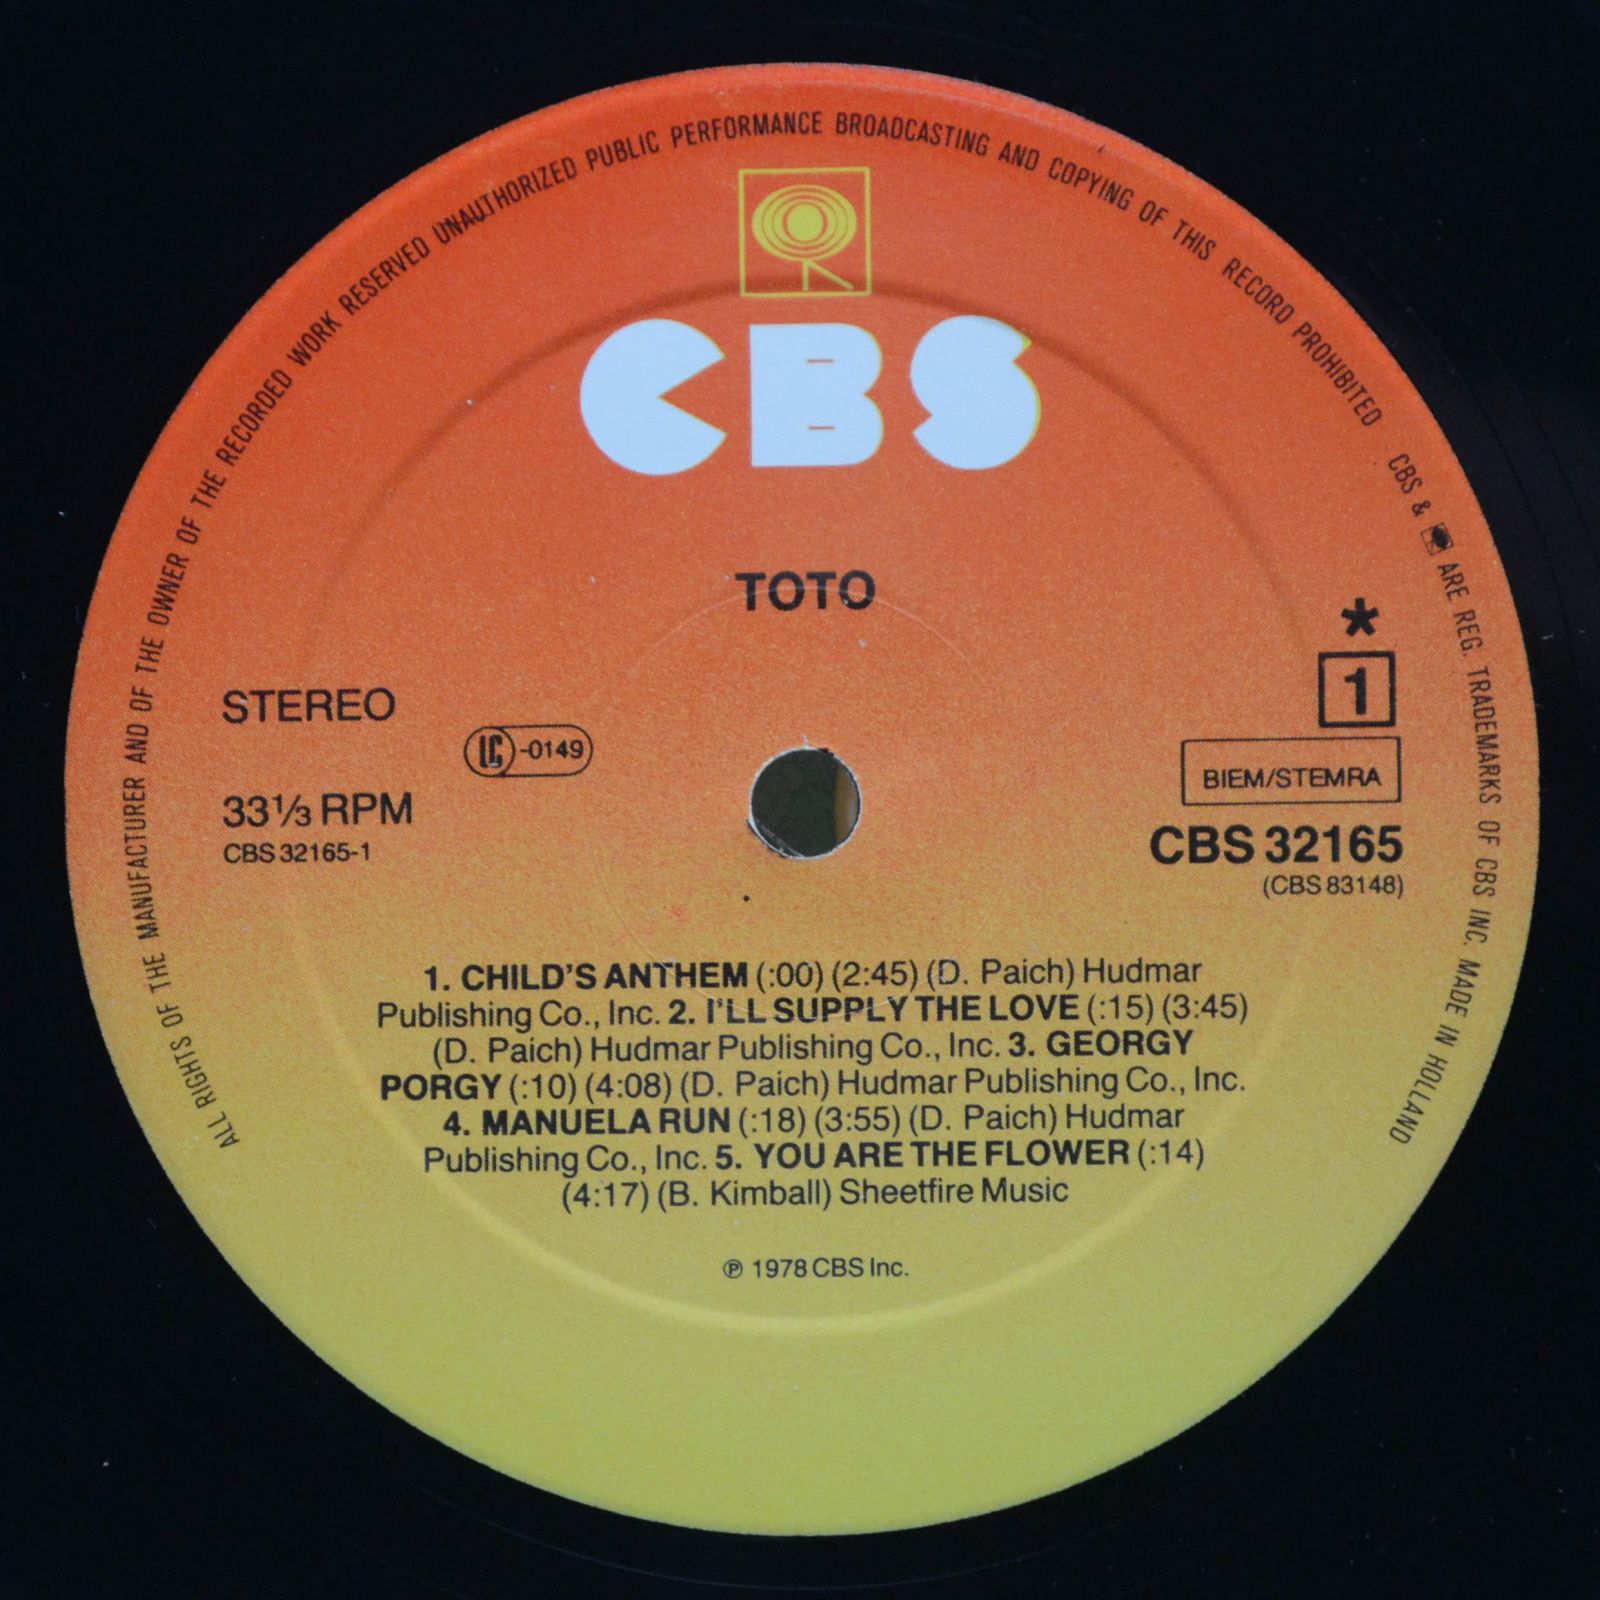 Toto — Toto, 1978